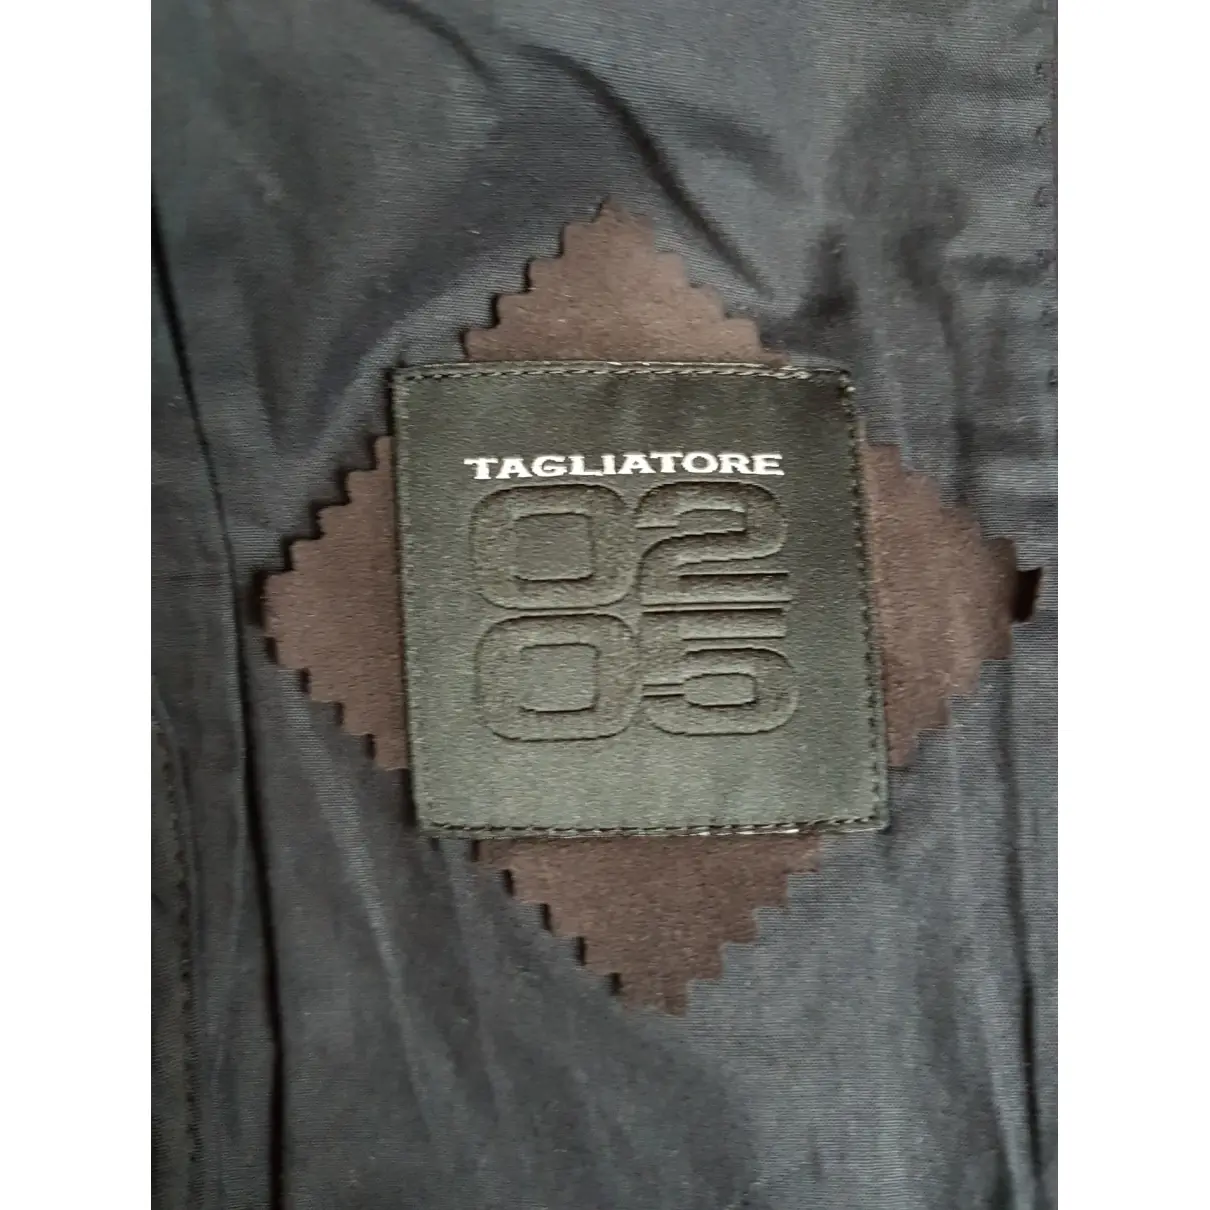 Buy Tagliatore Blue Cotton Jacket online